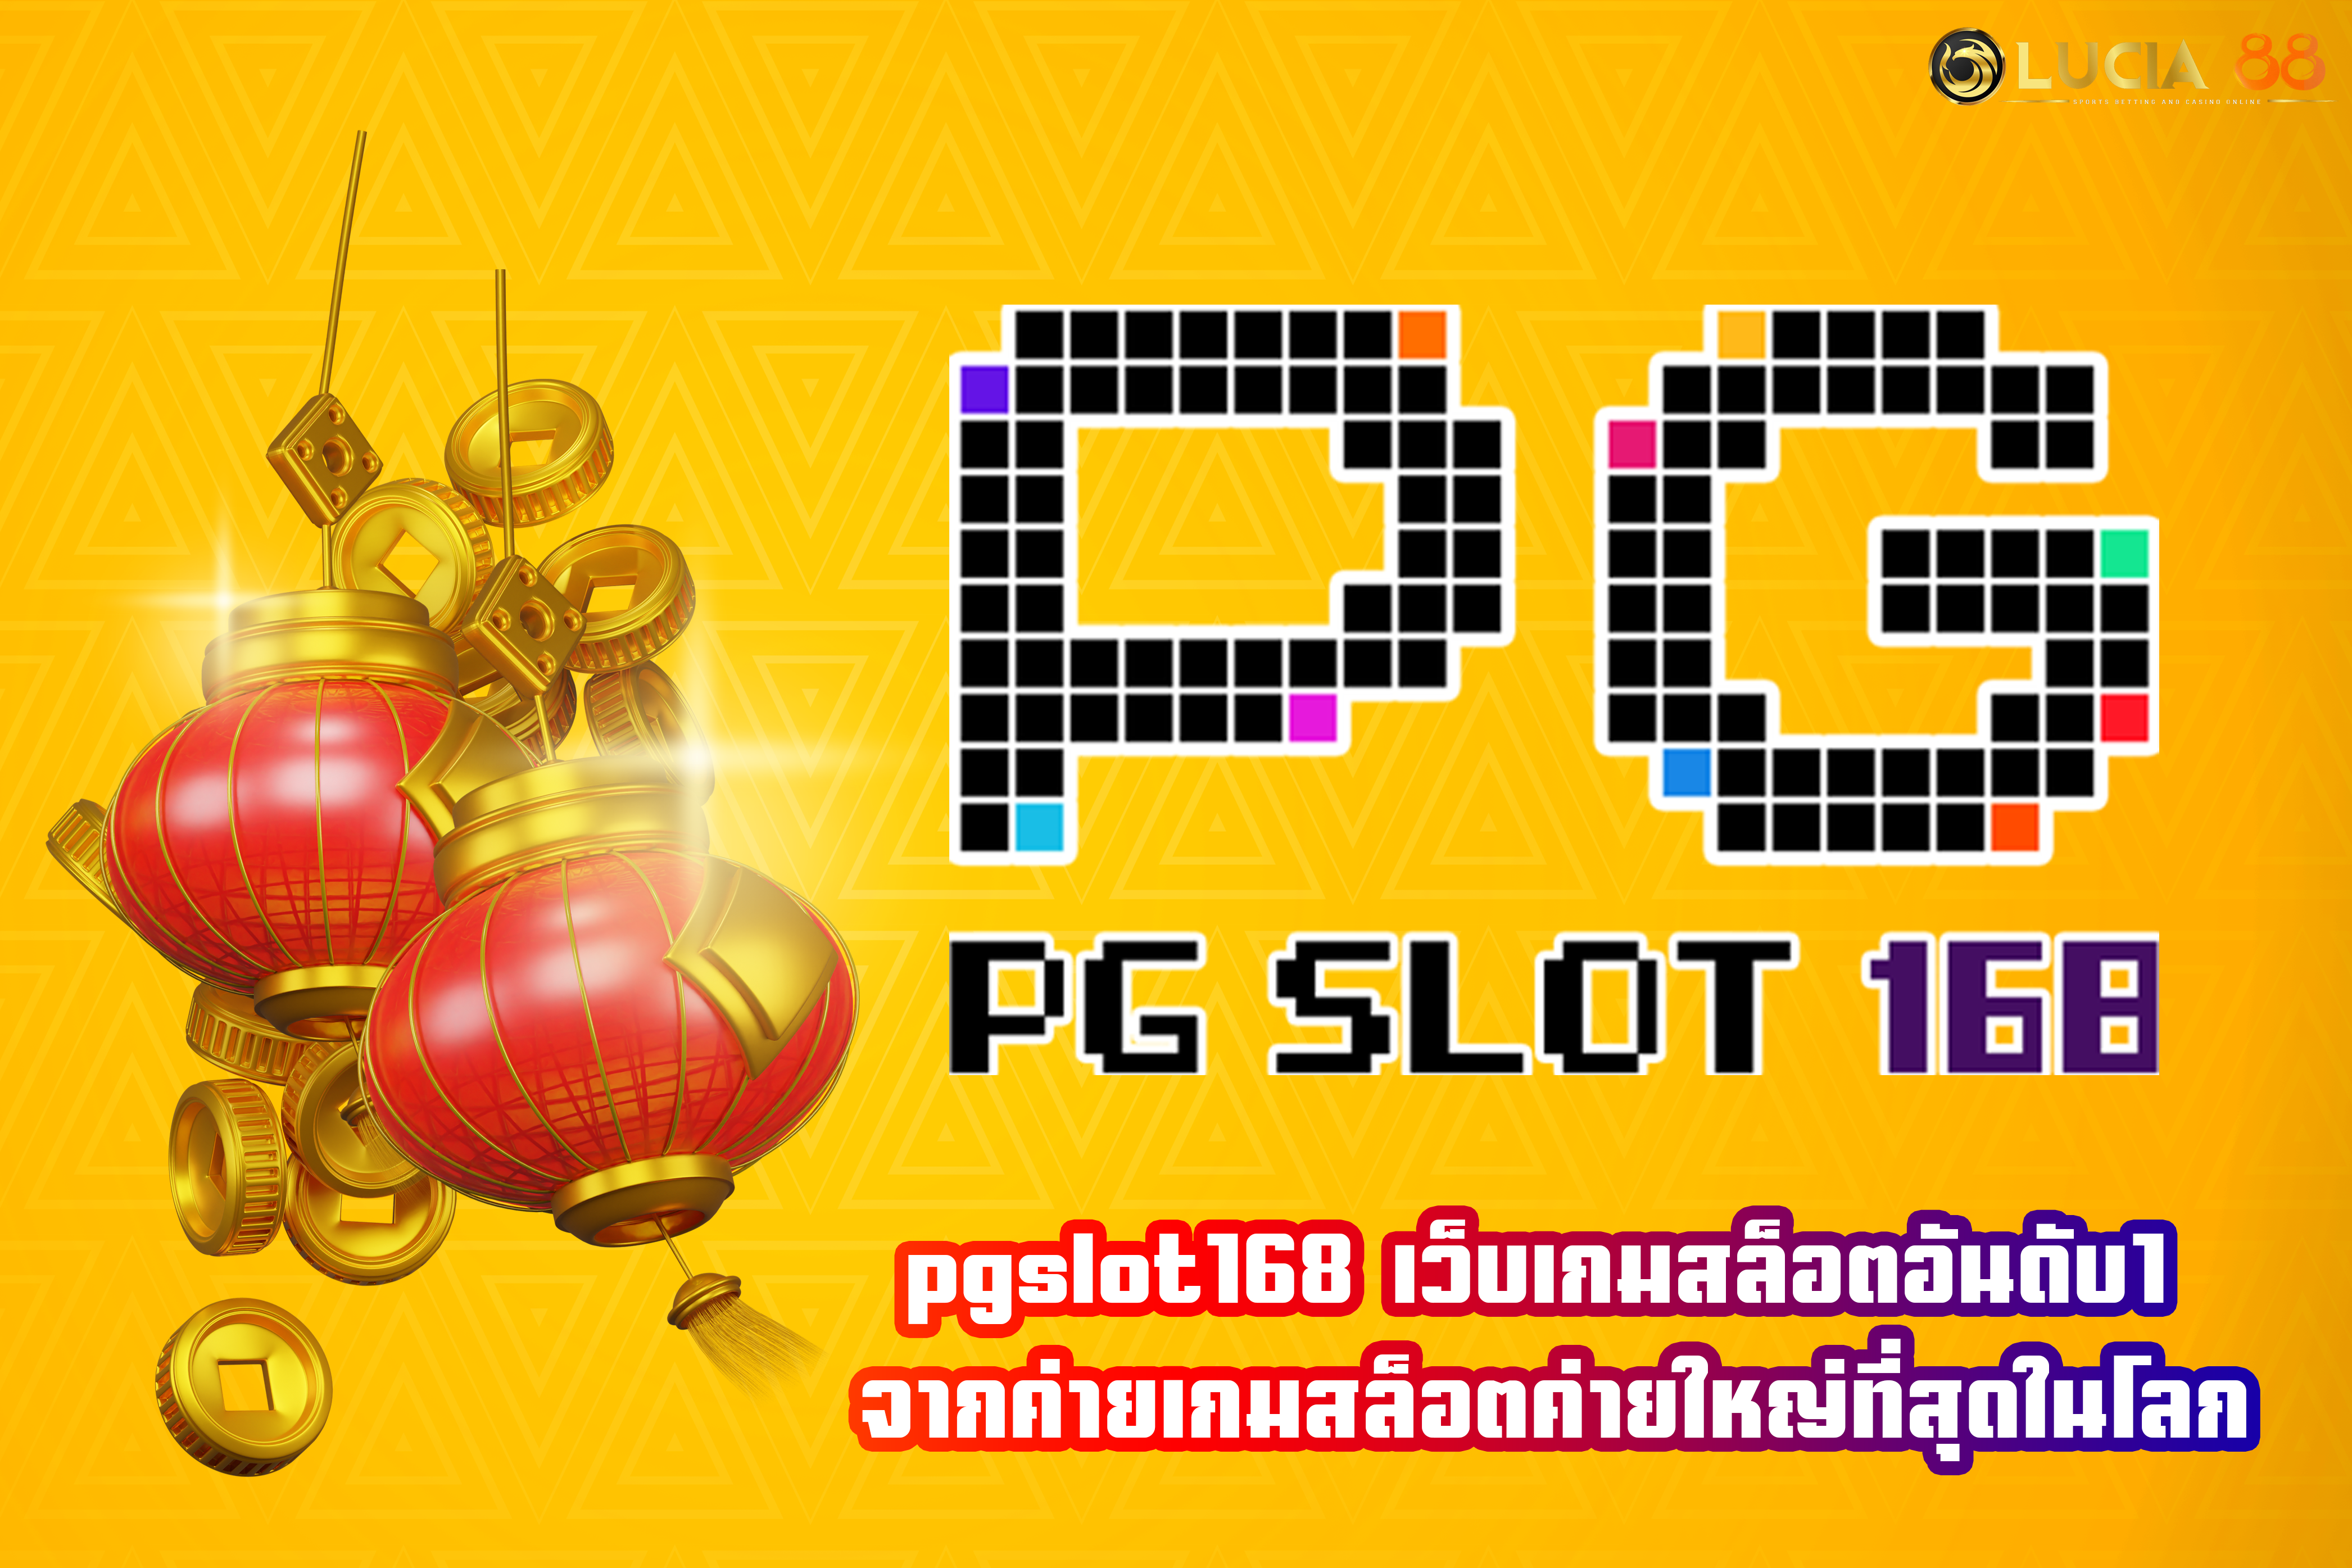 pgslot168 เว็บเกมสล็อตอันดับ1 จากค่ายเกมสล็อตค่ายใหญ่ที่สุดในโลก